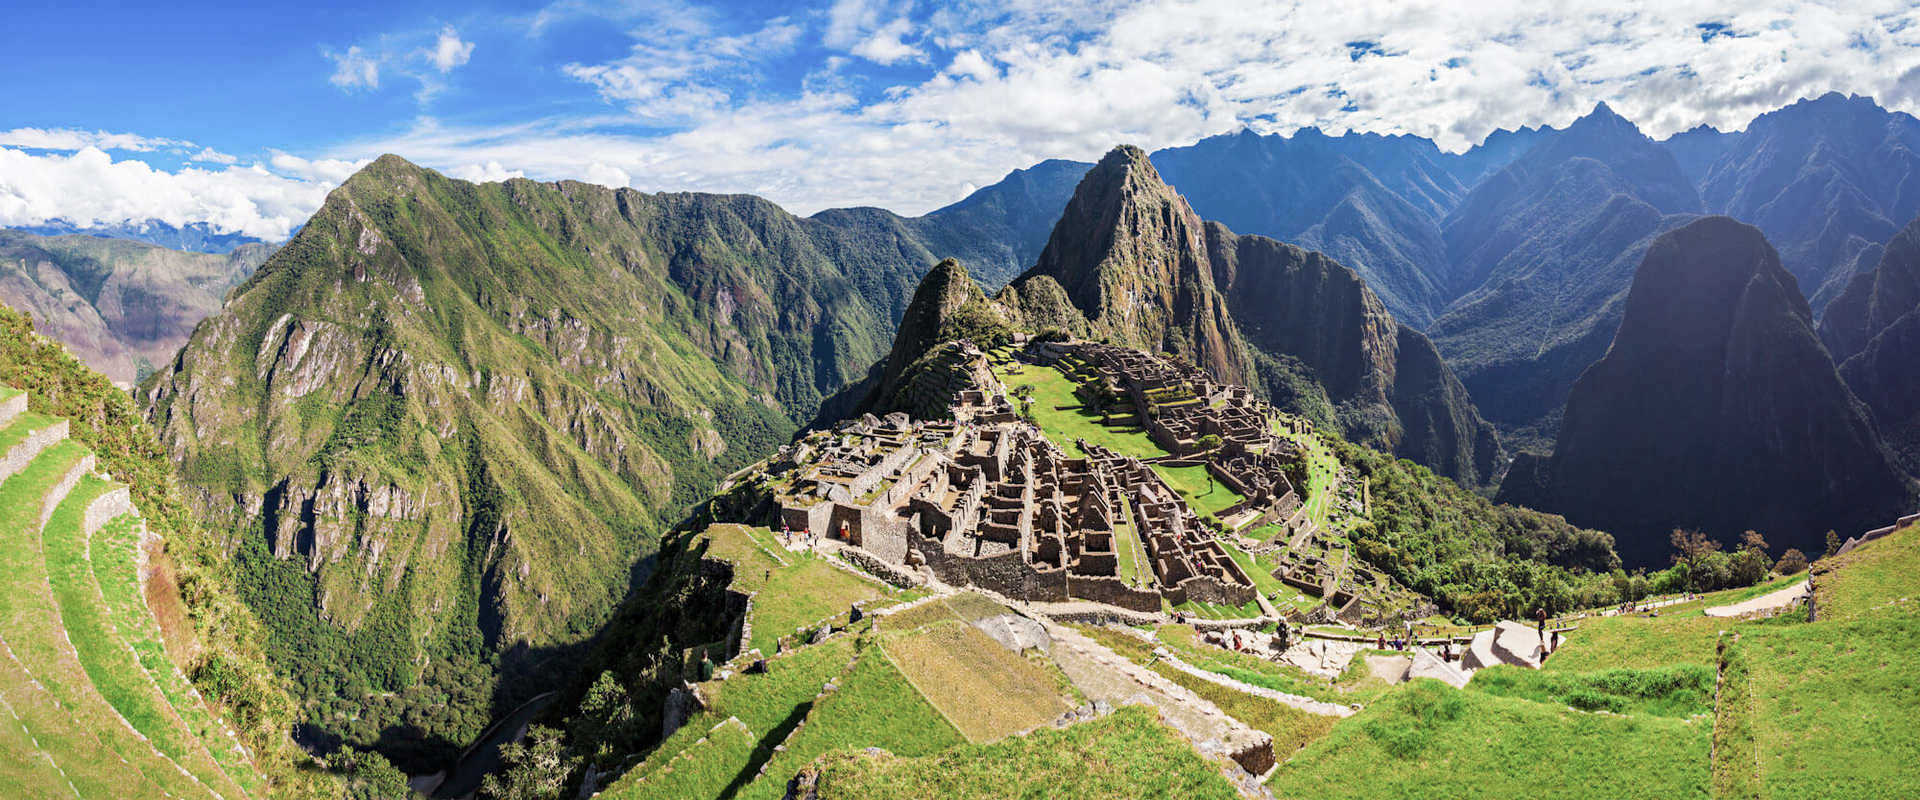 Machu Picchu wide angle image